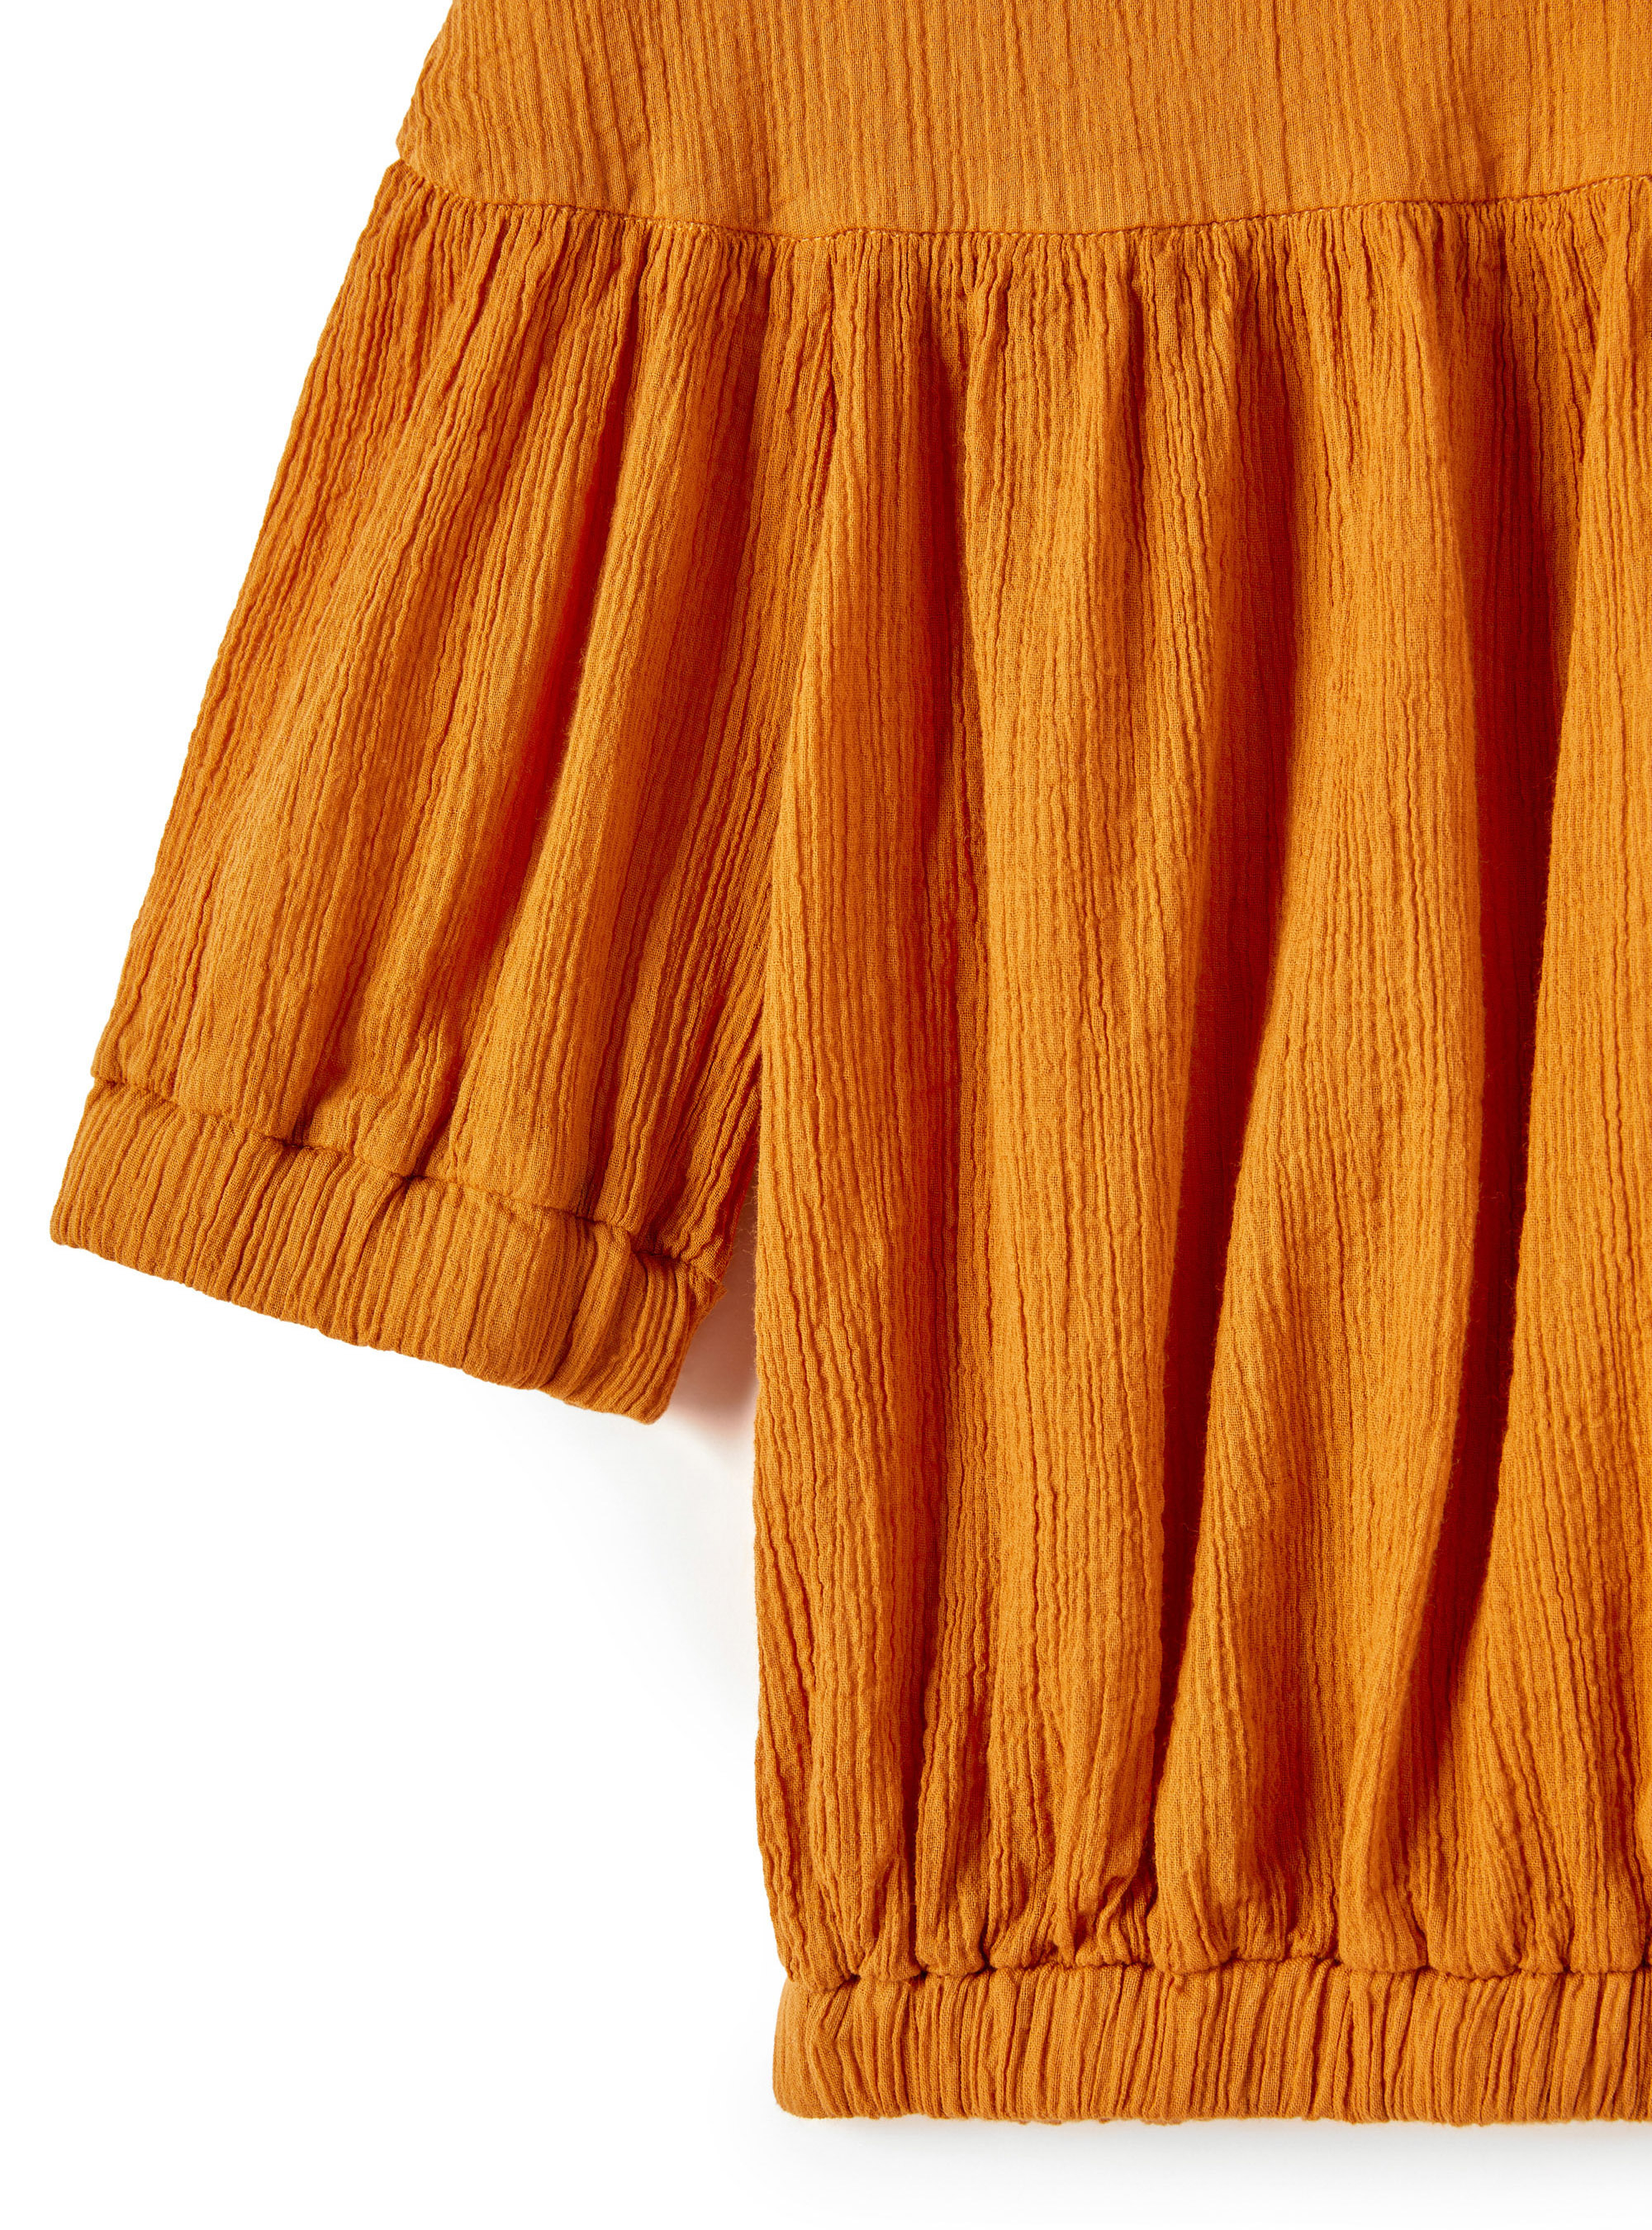 Orange cotton gauze shirt - Orange | Il Gufo